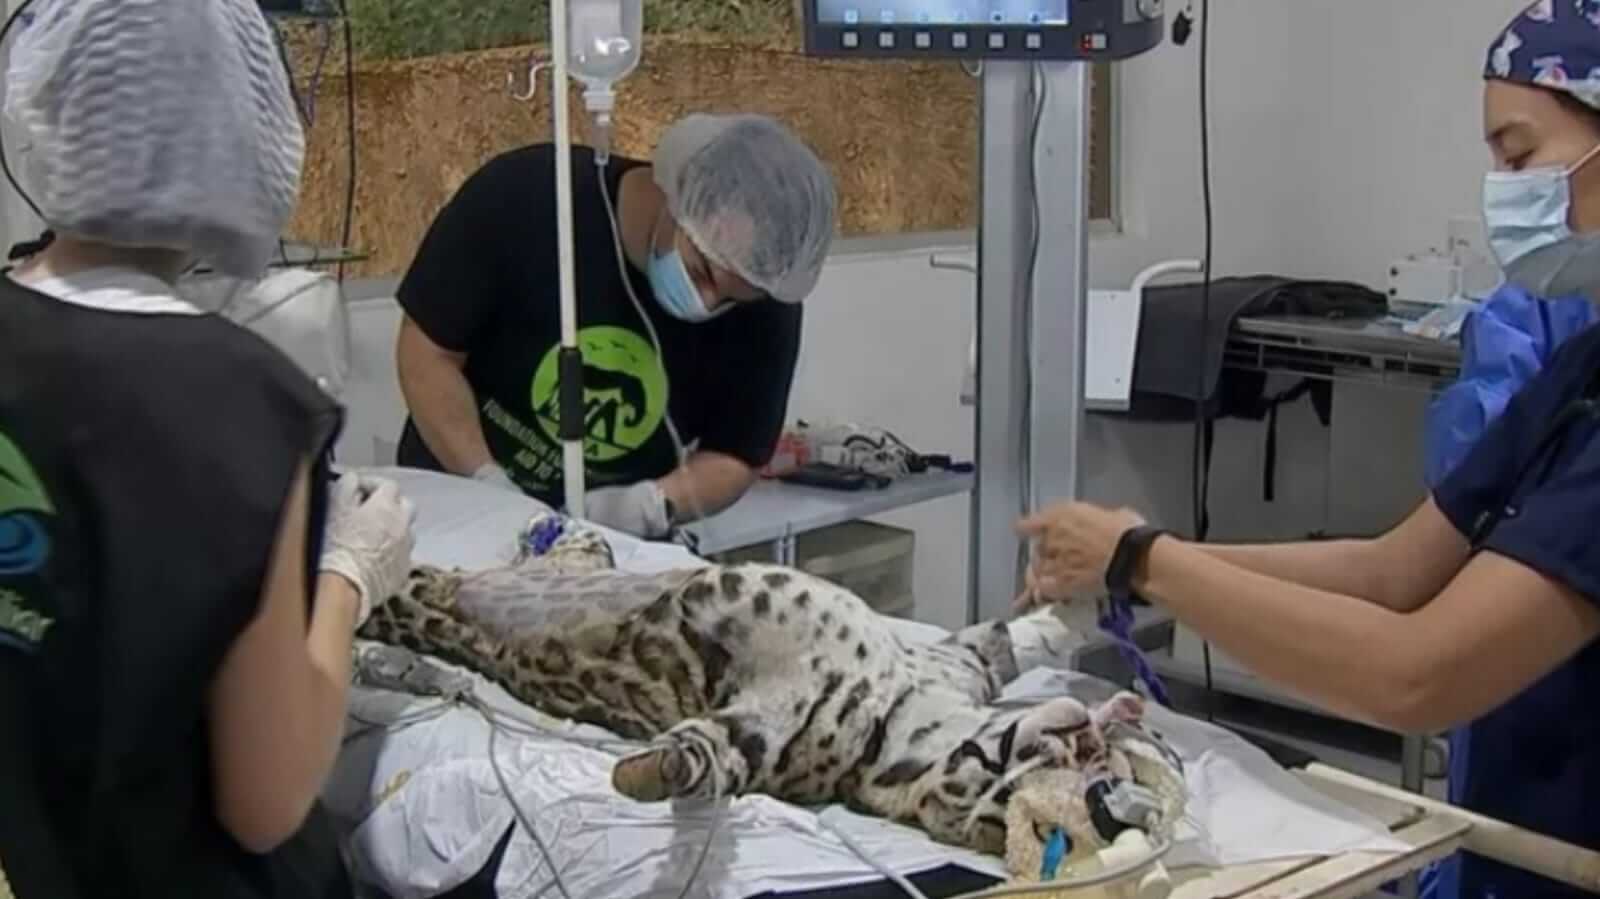 Cirurgia de jaguatirica na Mata Ciliar, em Jundiaí